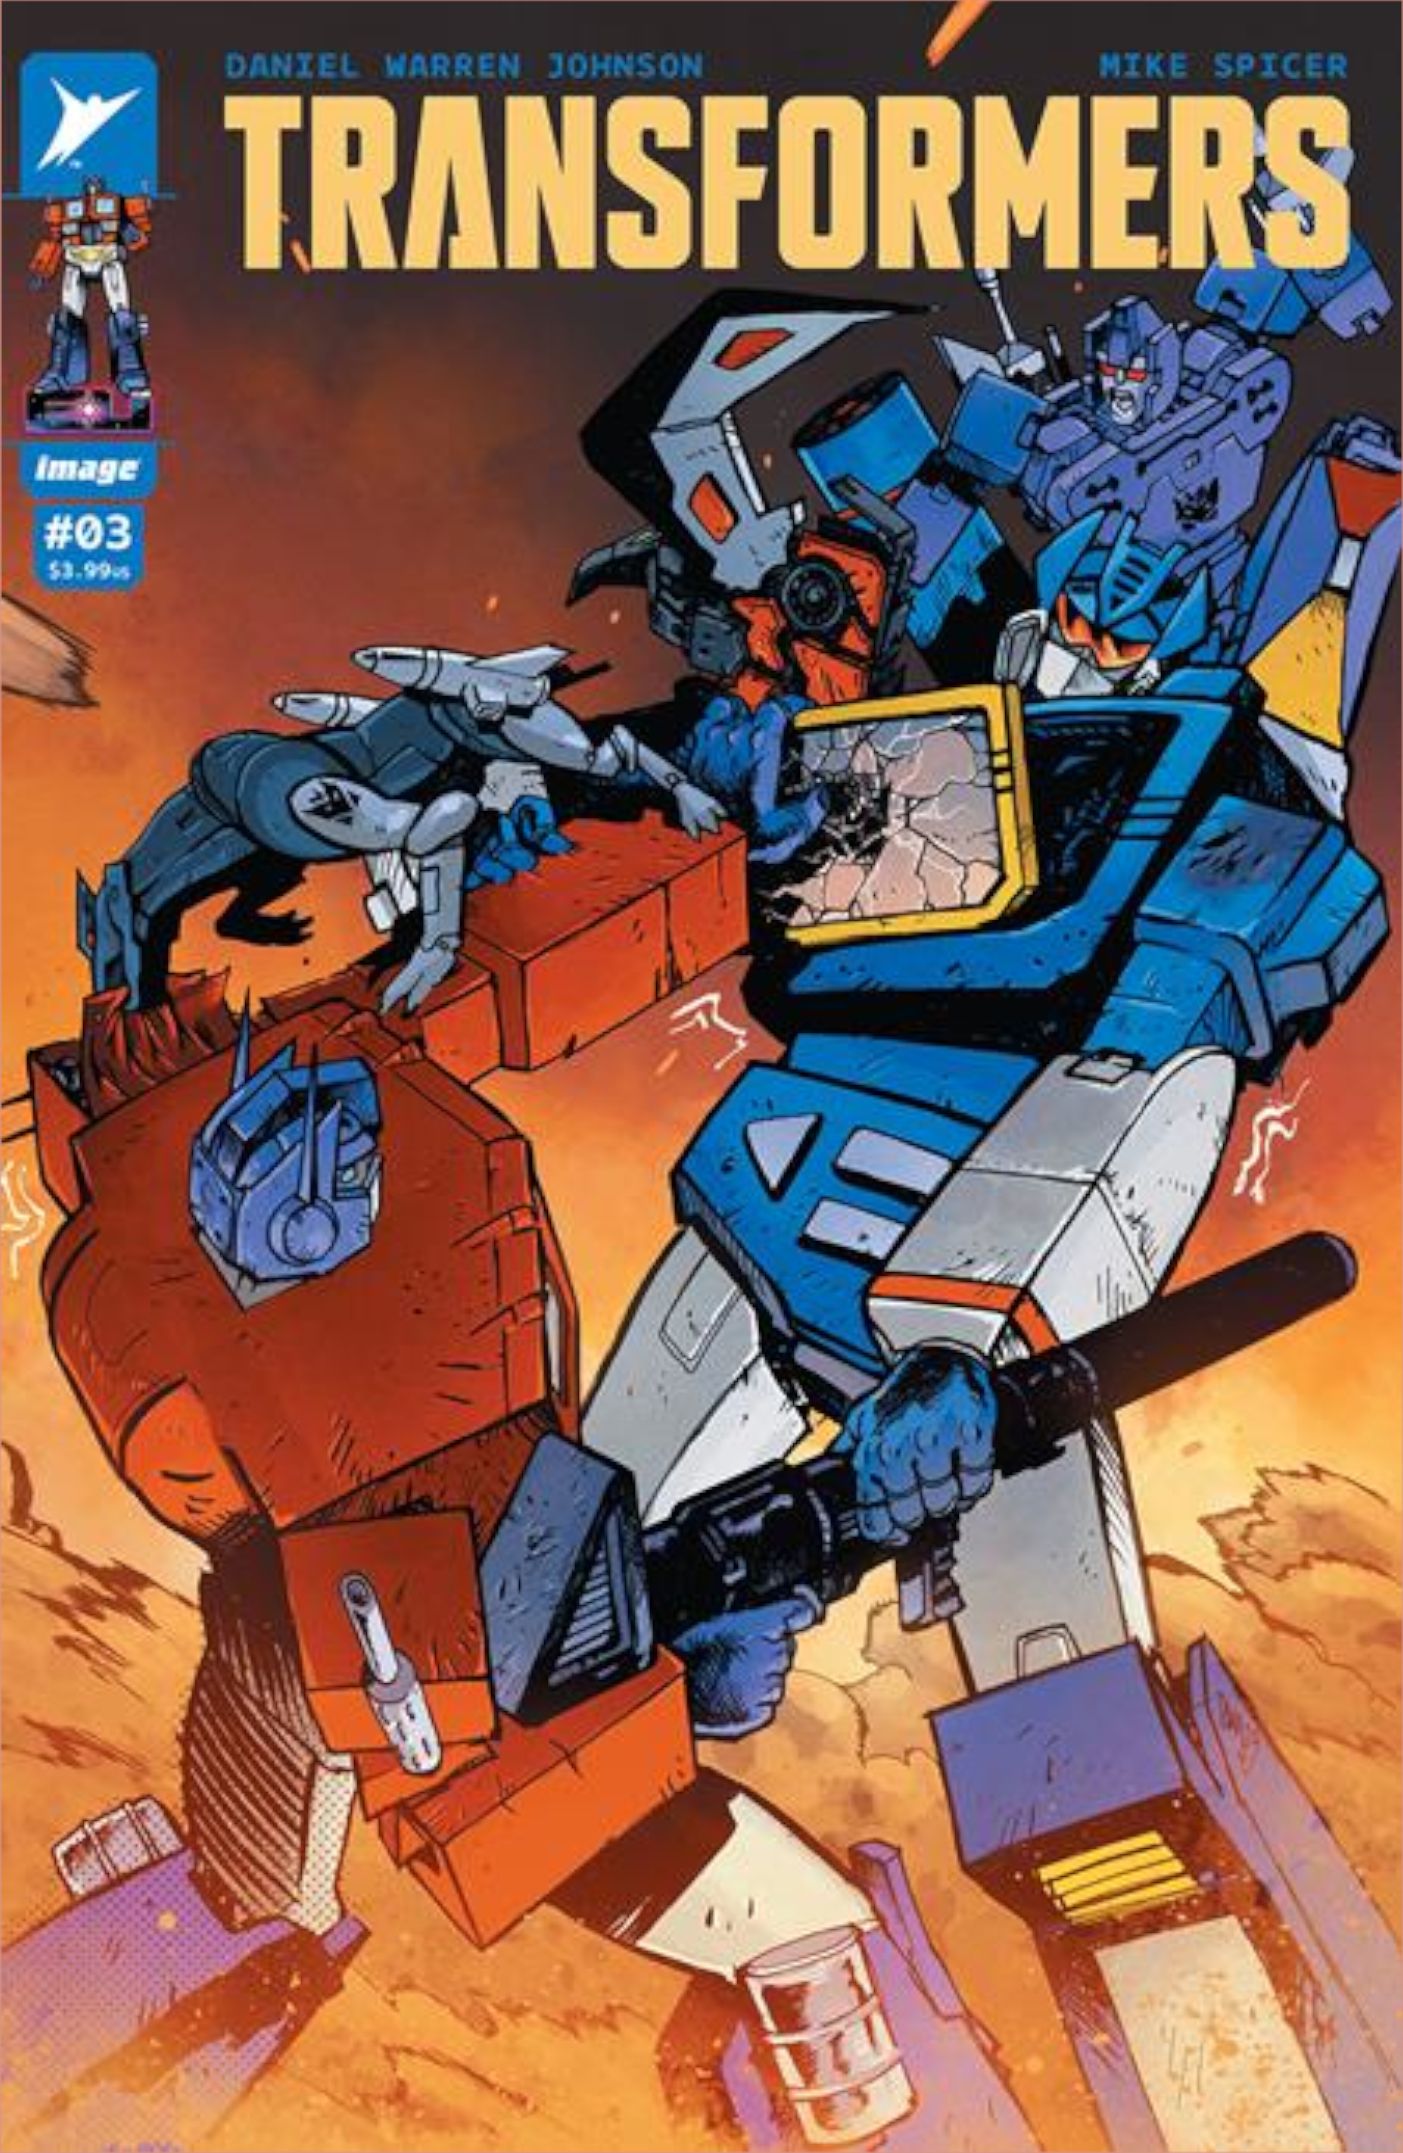 Transformers #3 kapağı Daniel Warren Johnson'dan